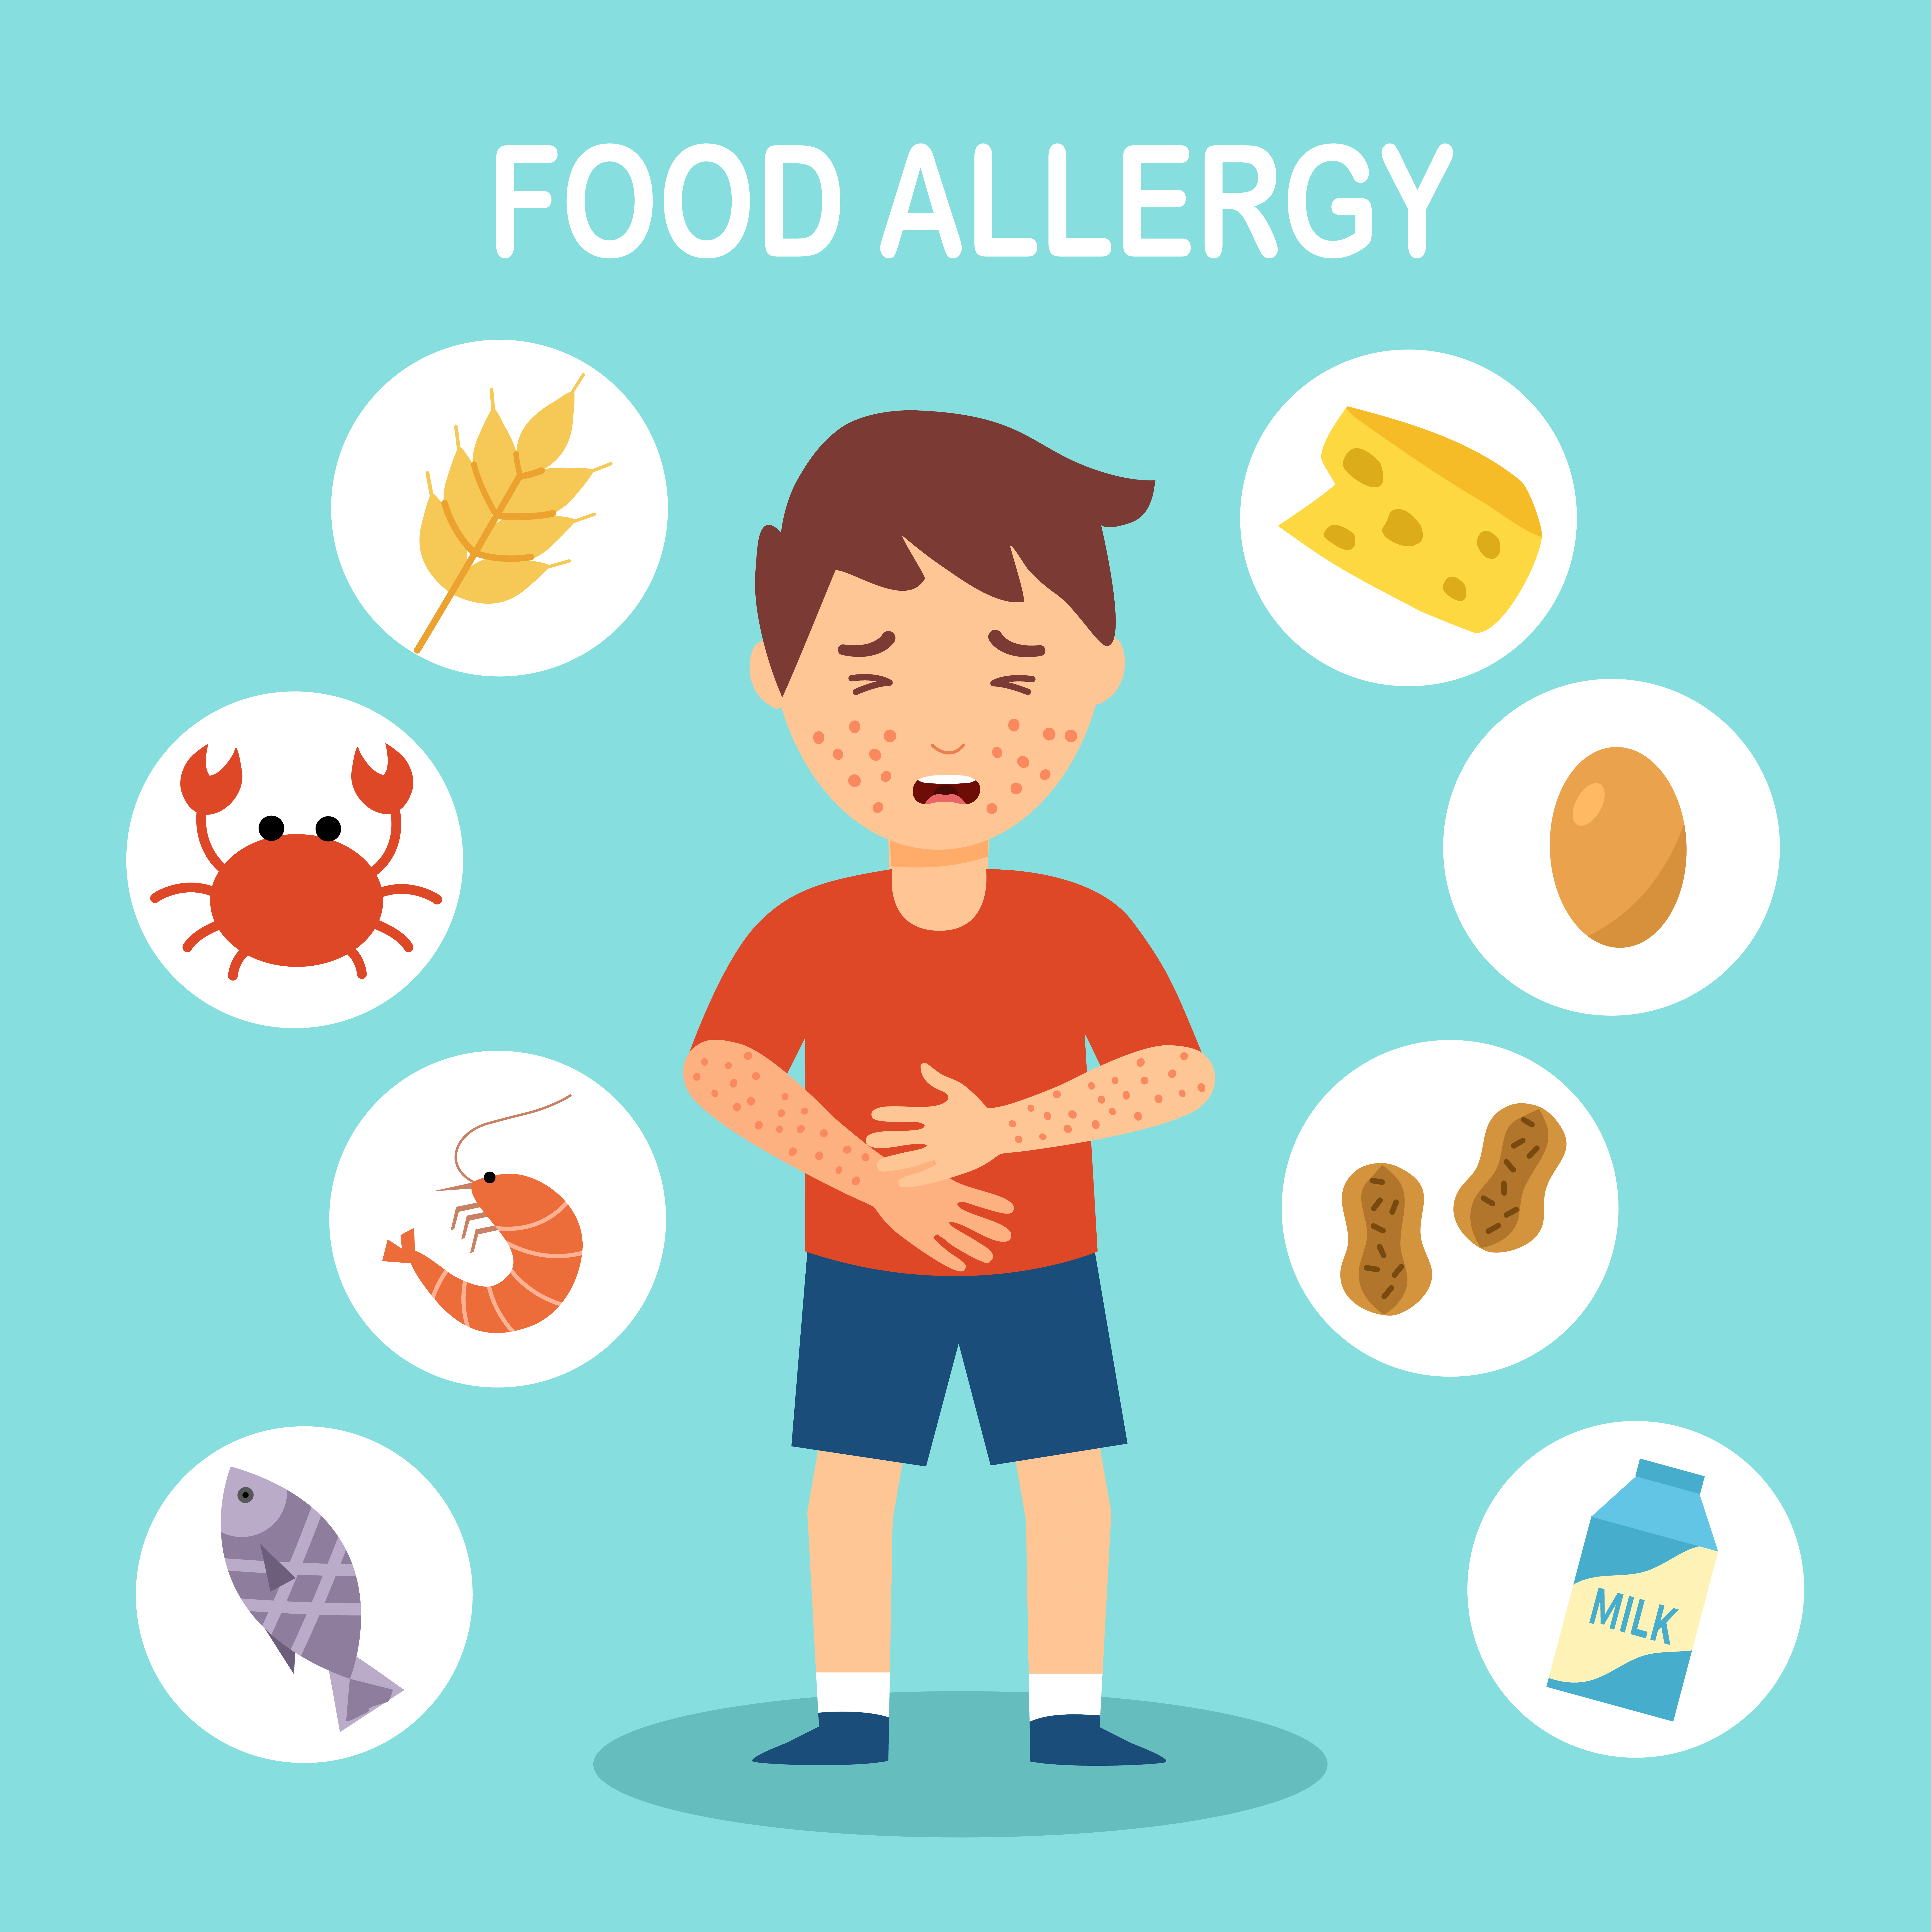 Celebrating National Allergy Day